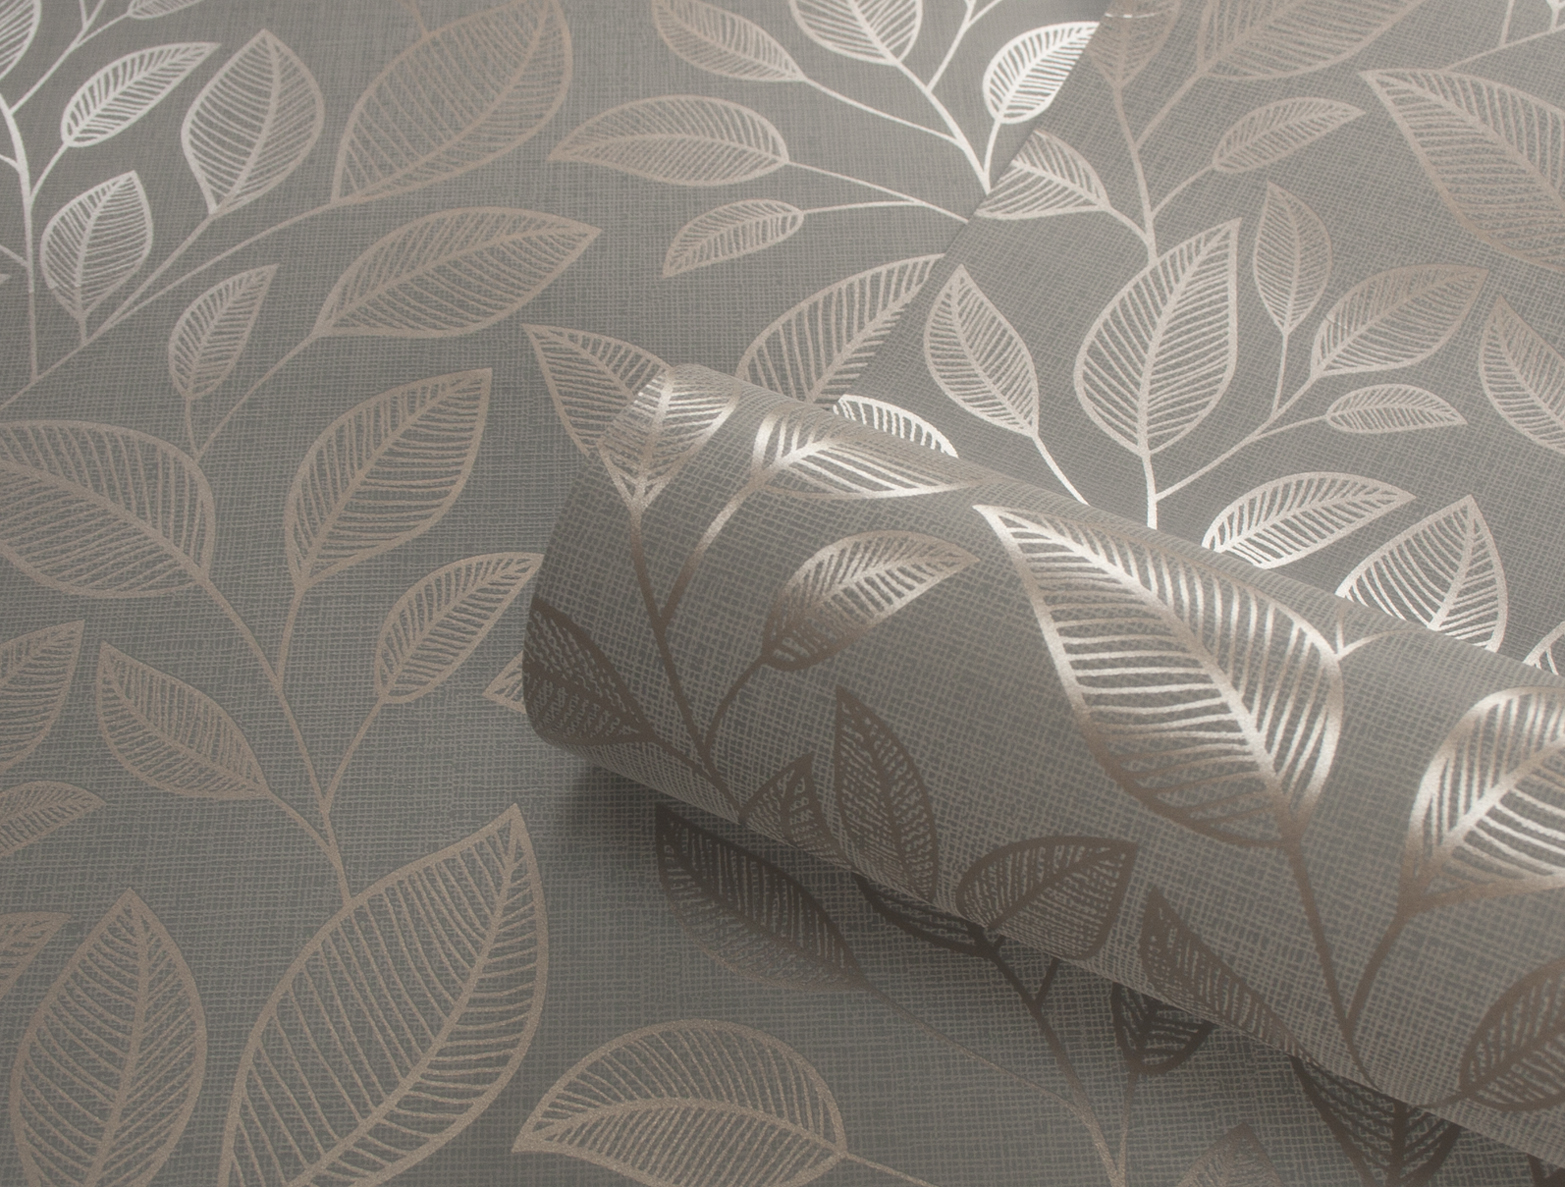 rose gold wallpaper,leaf,wallpaper,pattern,wall,textile